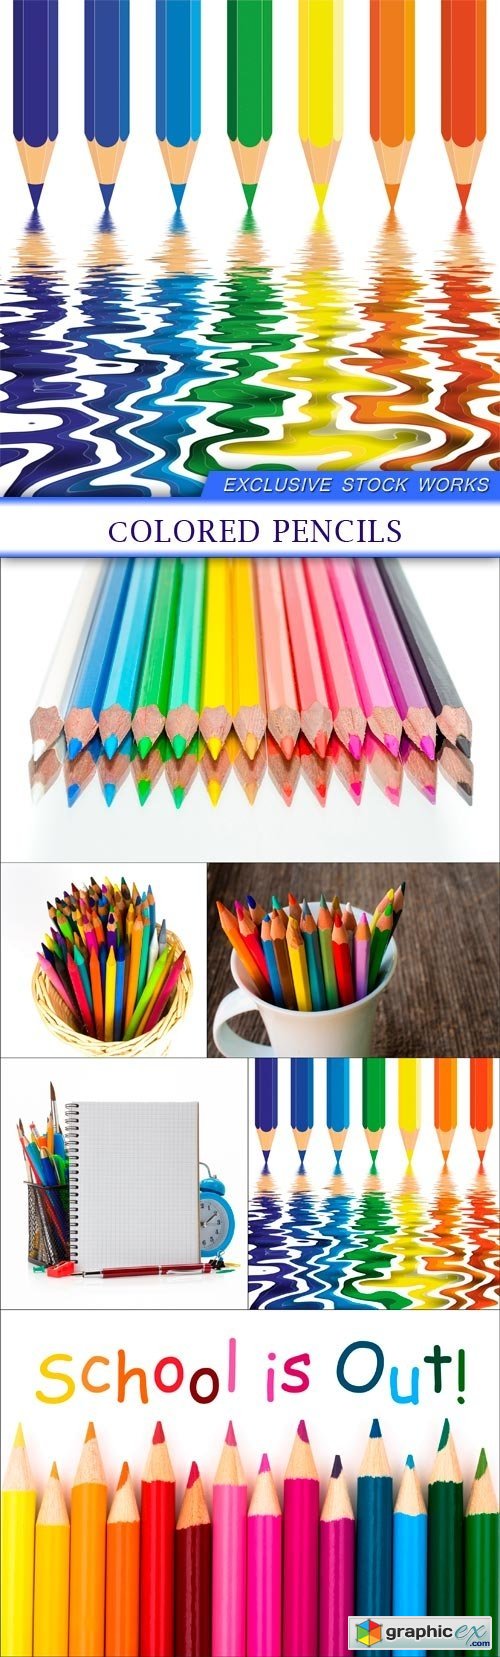 olored pencils 6X JPEG